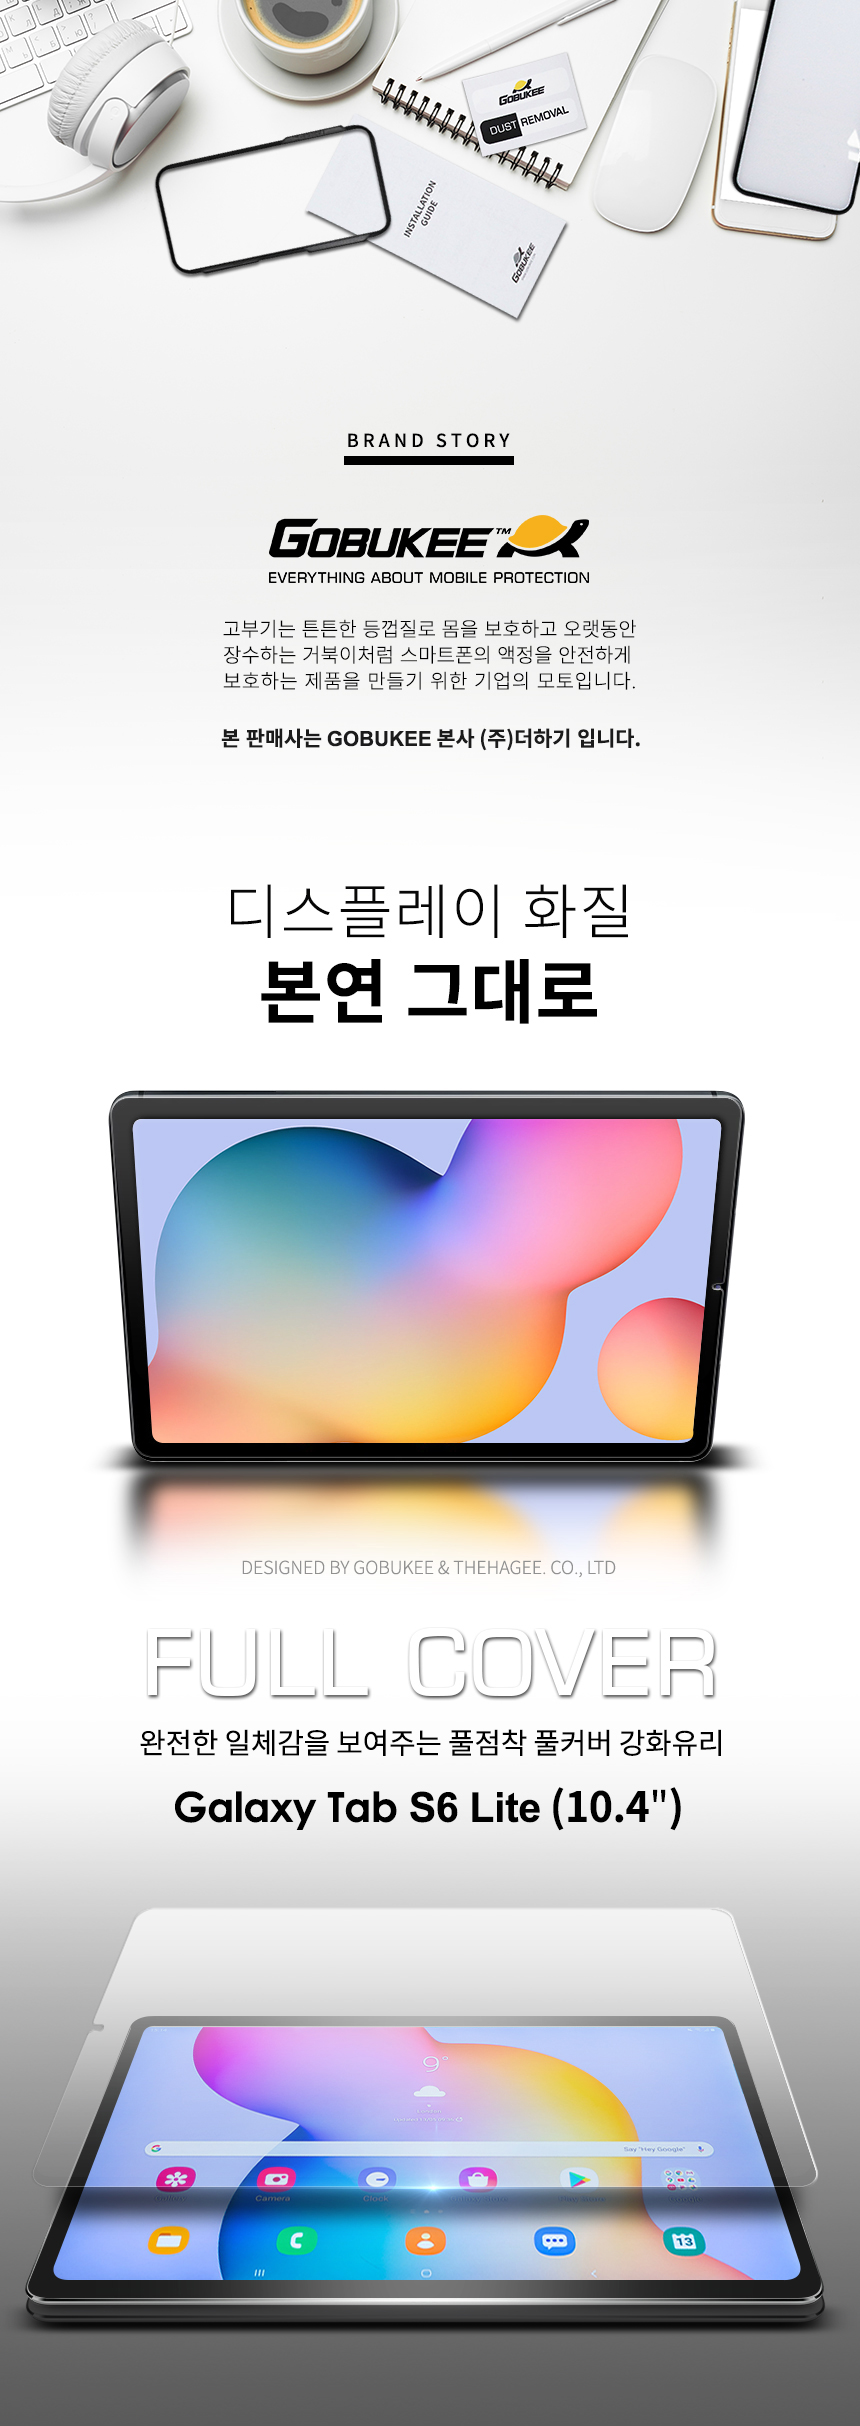 Galaxy-tab-S6Lite-Glass_Page-Ver11_Smart_01.jpg